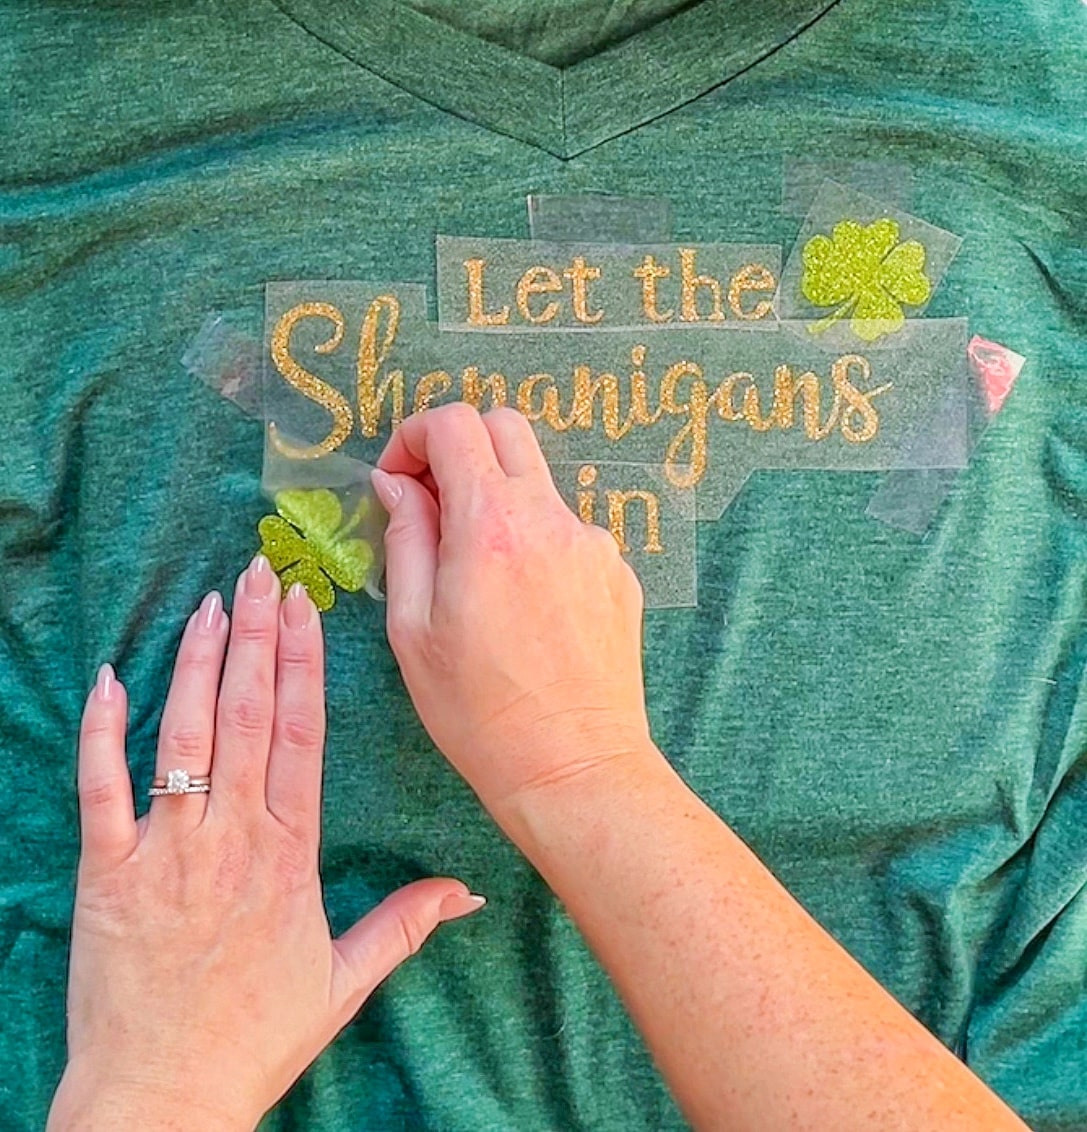 cool St. Patrick's Day shirts: DIY Cricut let the shenanigans begin shirt 